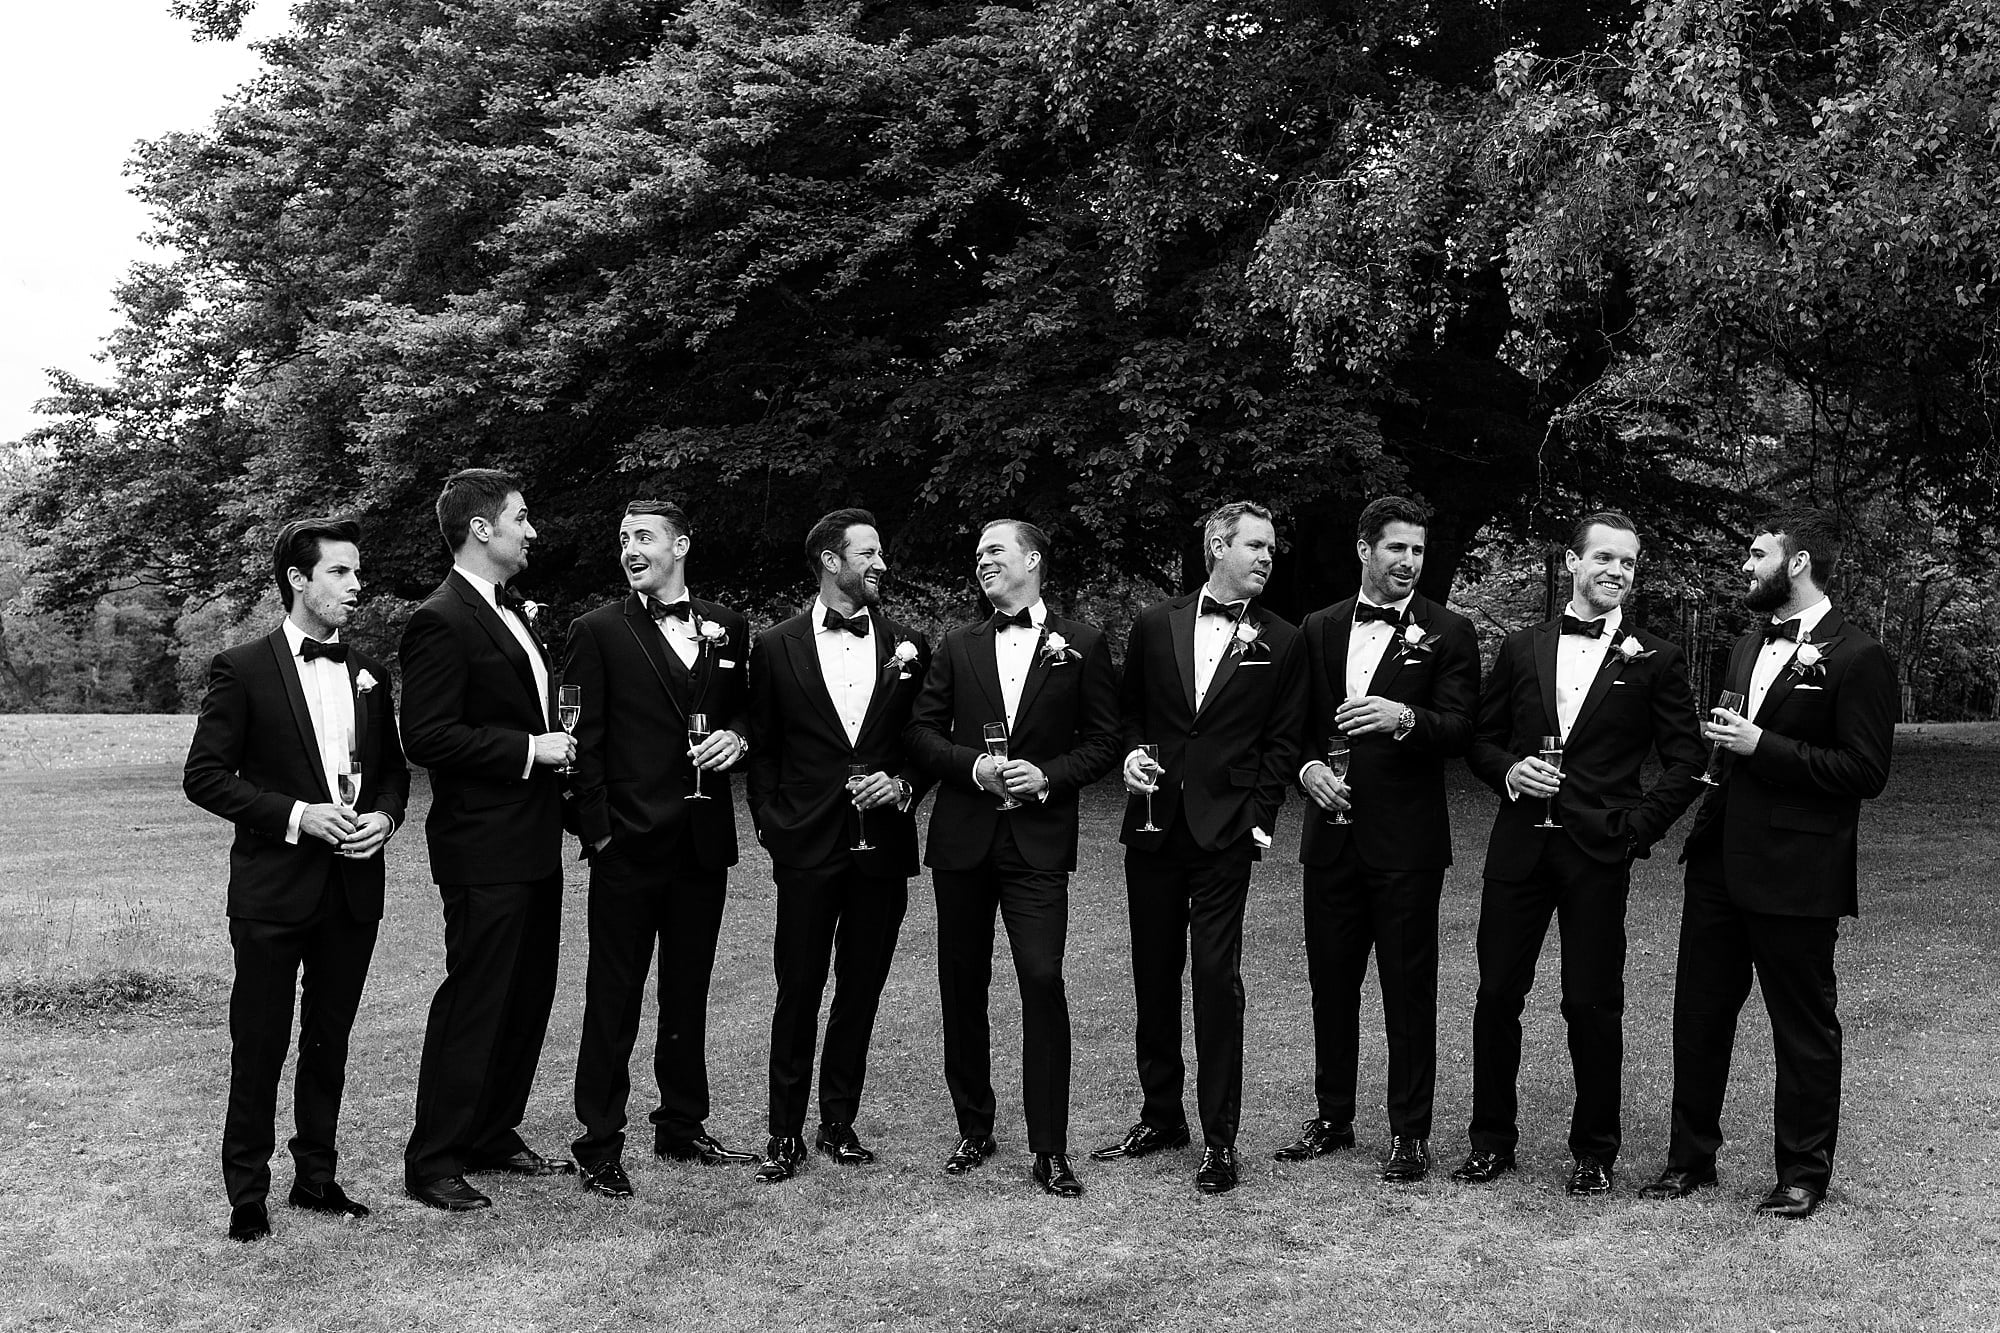 raemoir house wedding photography group photo casual groomsmen tuxedo Zegna suit outdoors